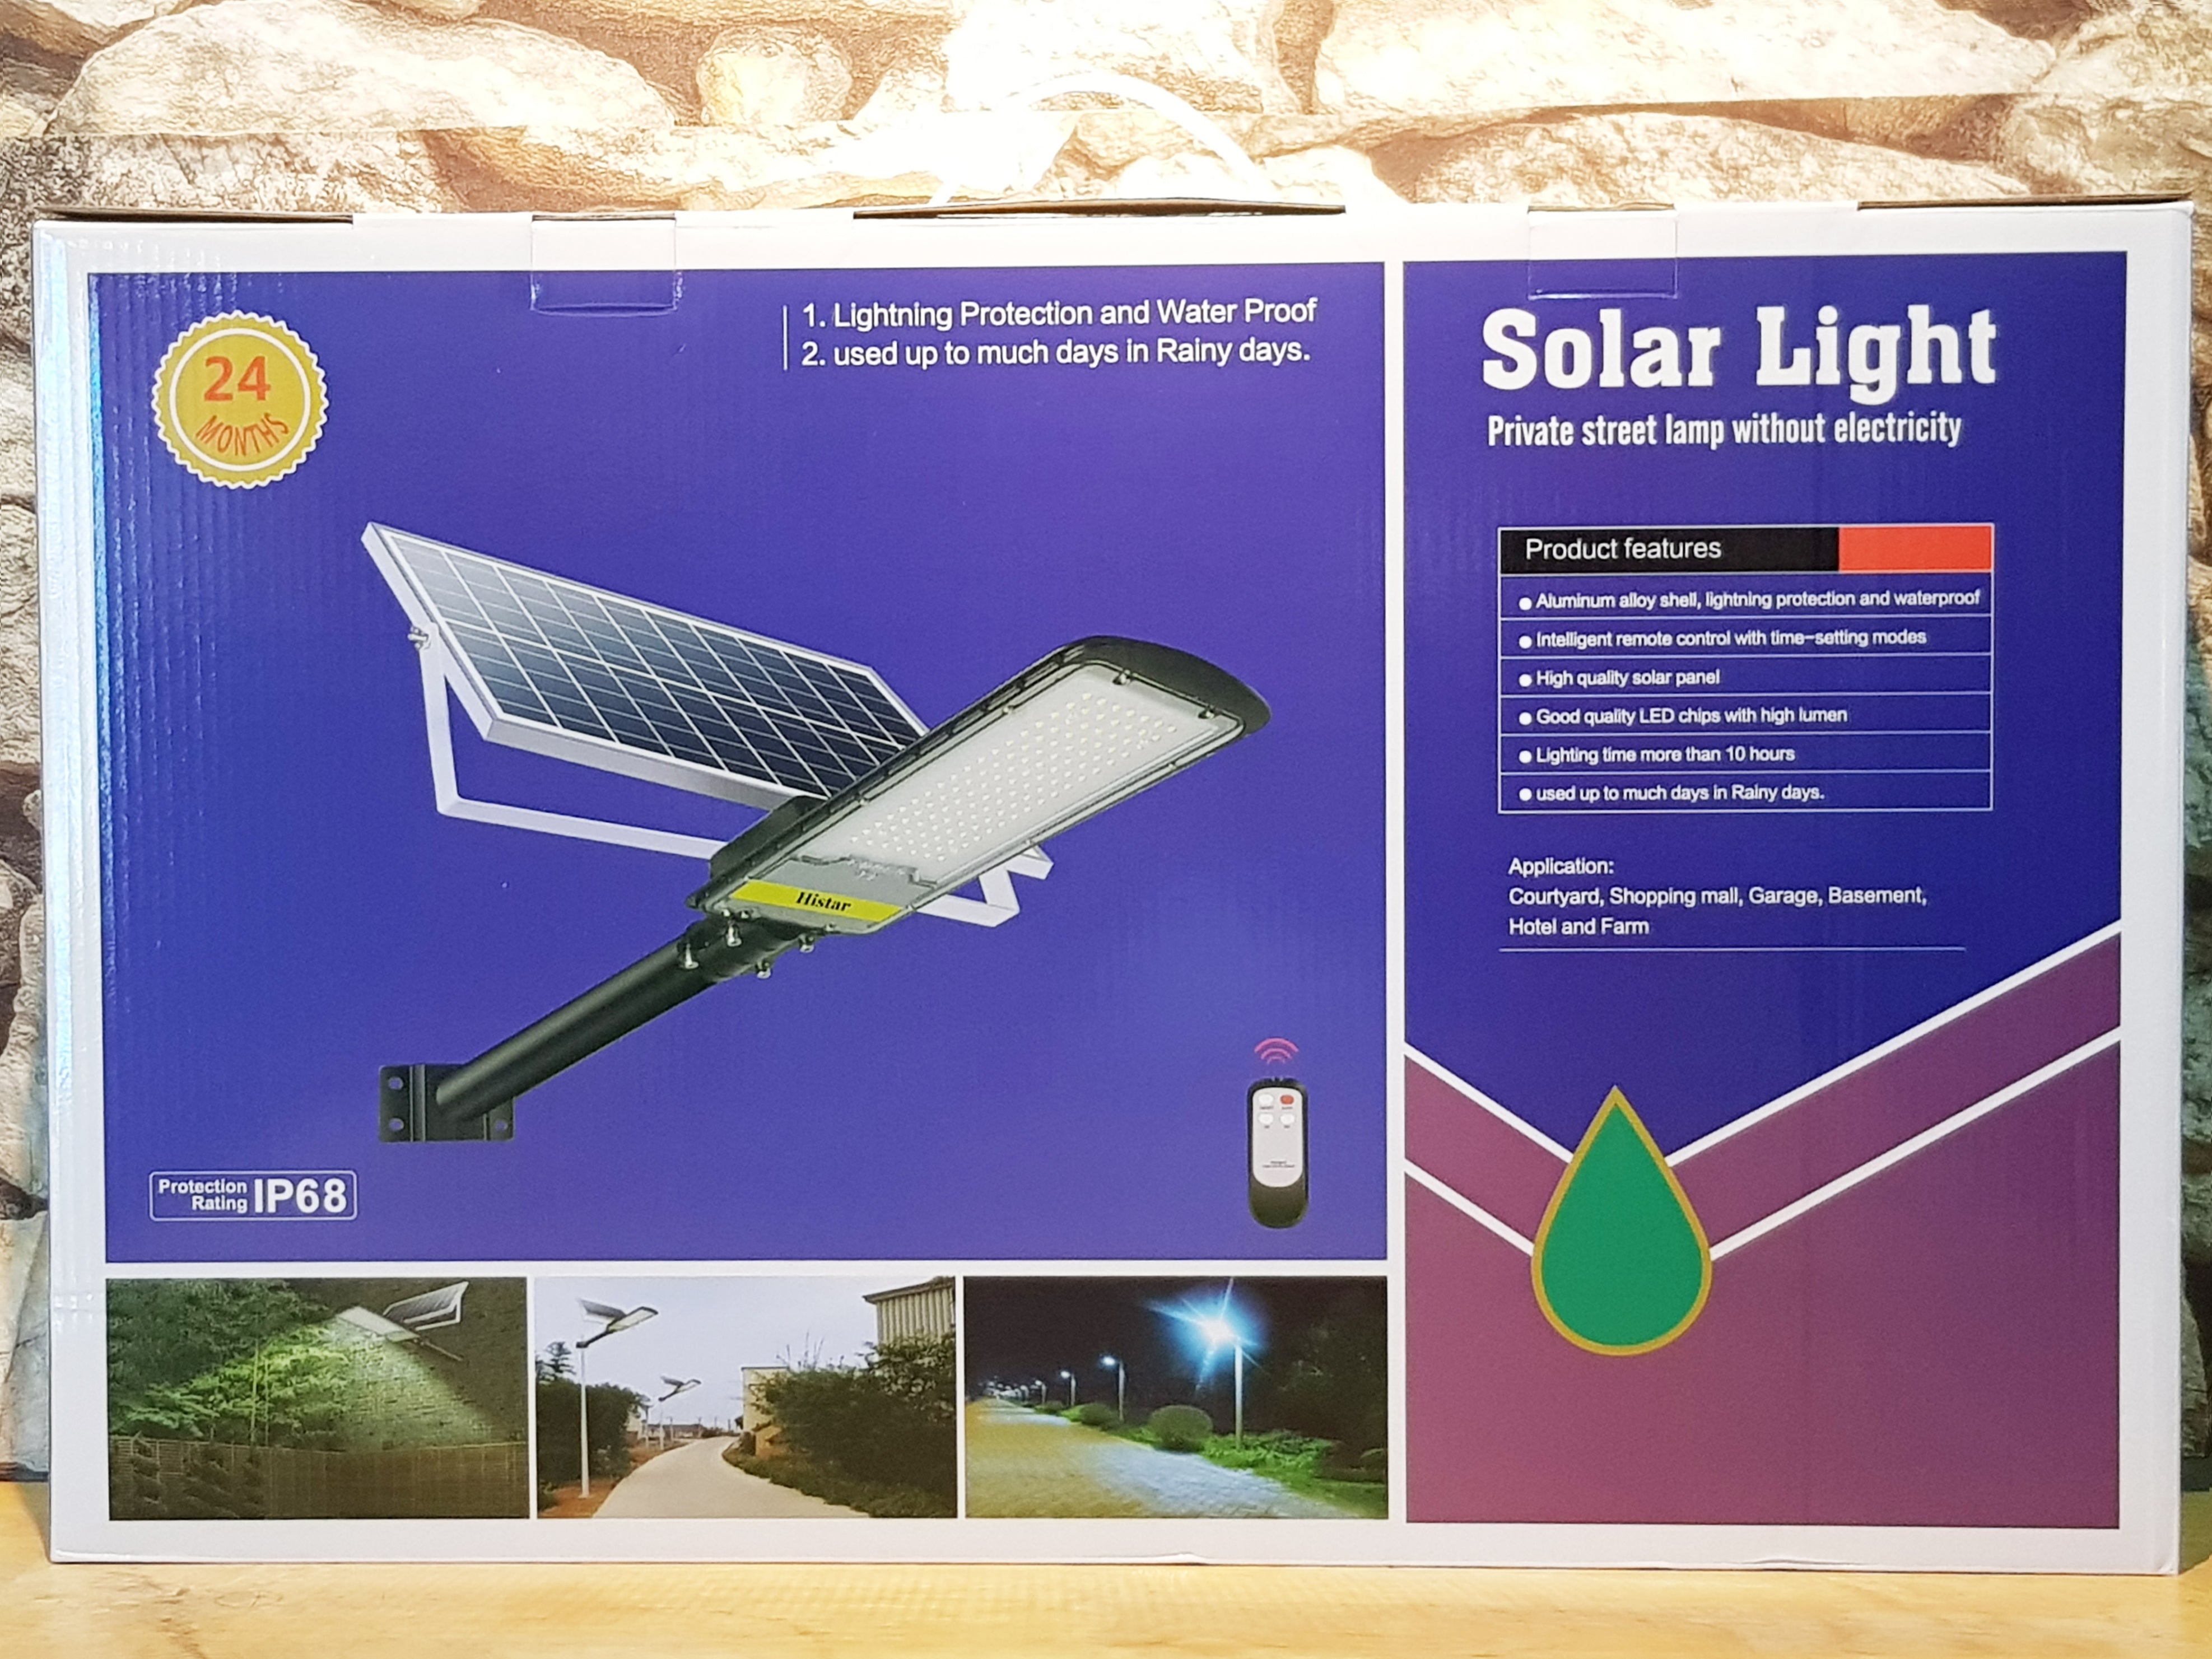 HS-298 Histar Solar Light street lamp